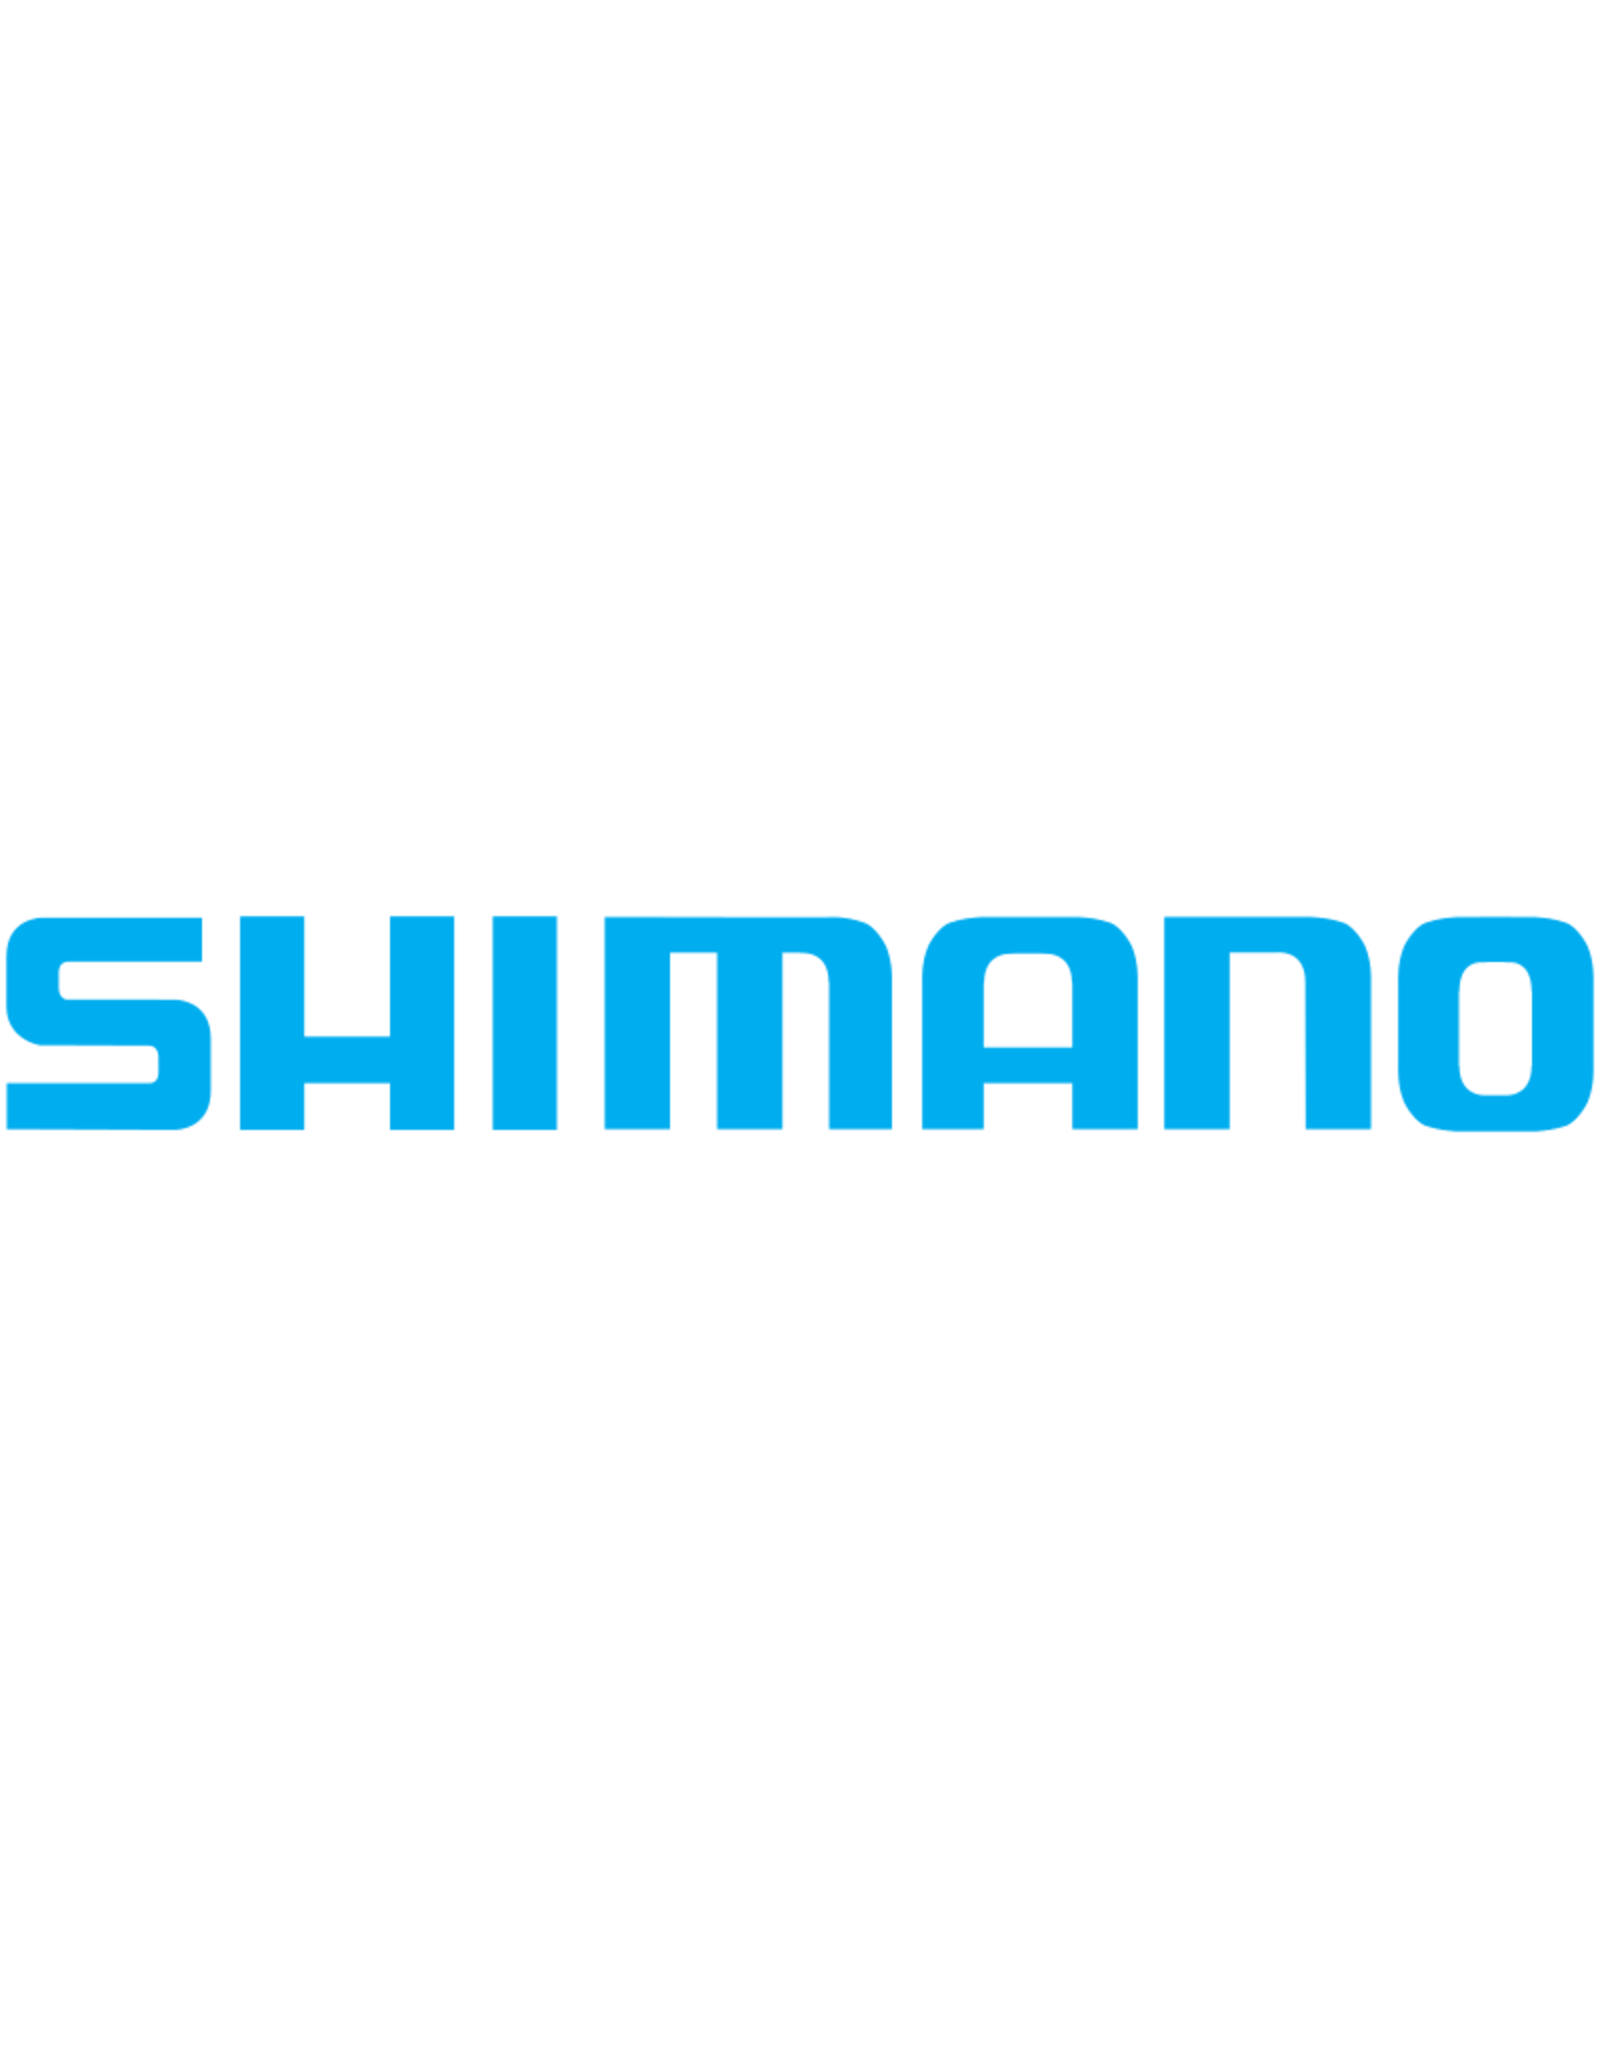 Shimano TLD0173  MAIN SHAFT